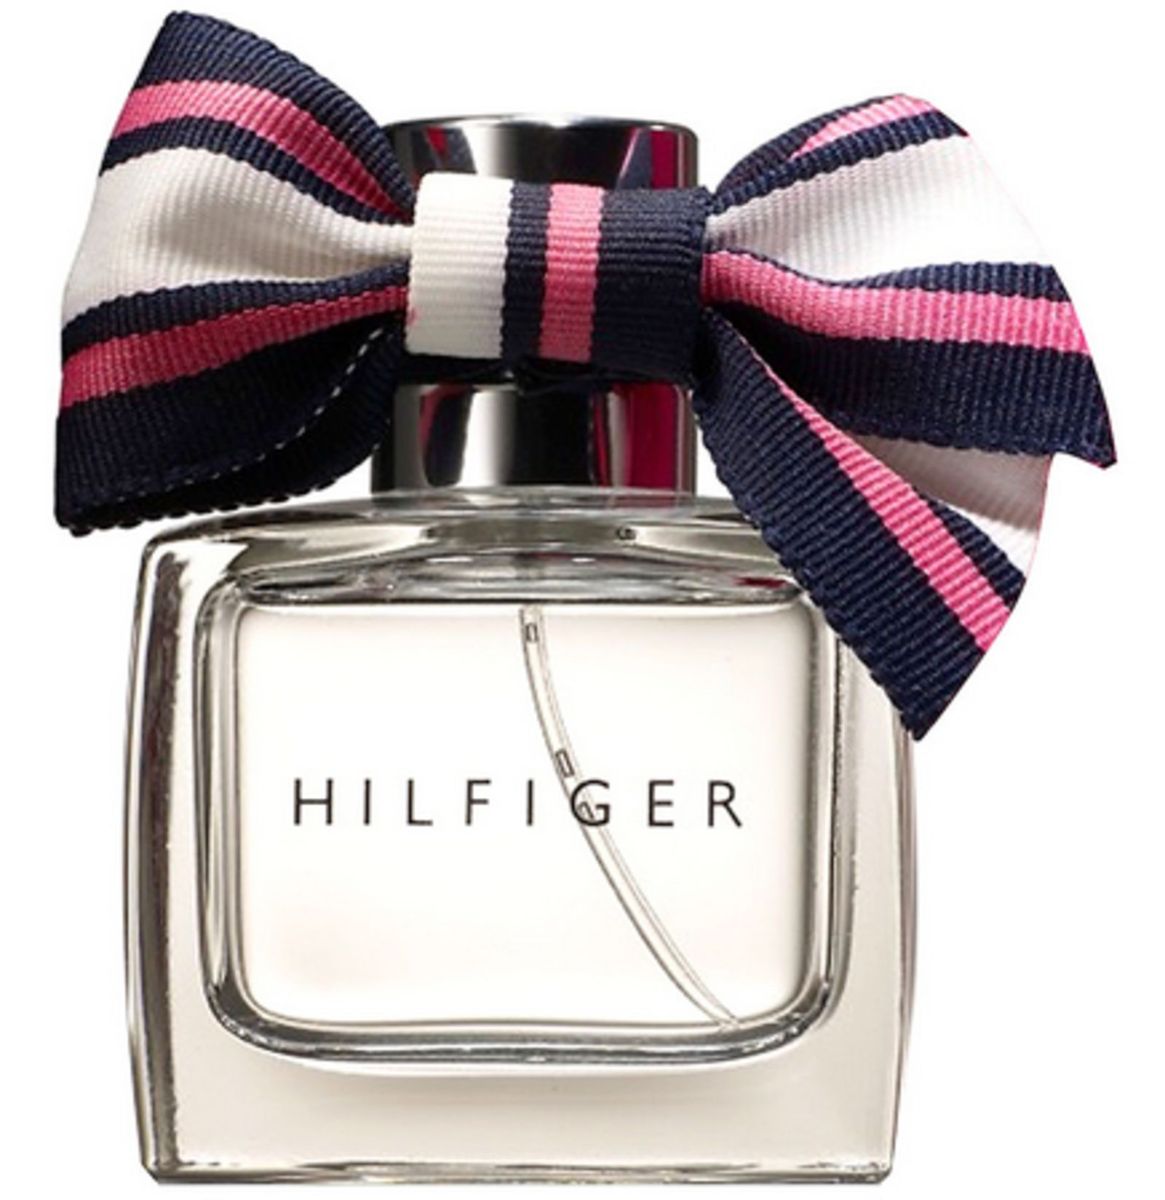 Perfume Hilfiger Woman Edp Feminino 50ml Tommy Hilfiger | Perfume ...